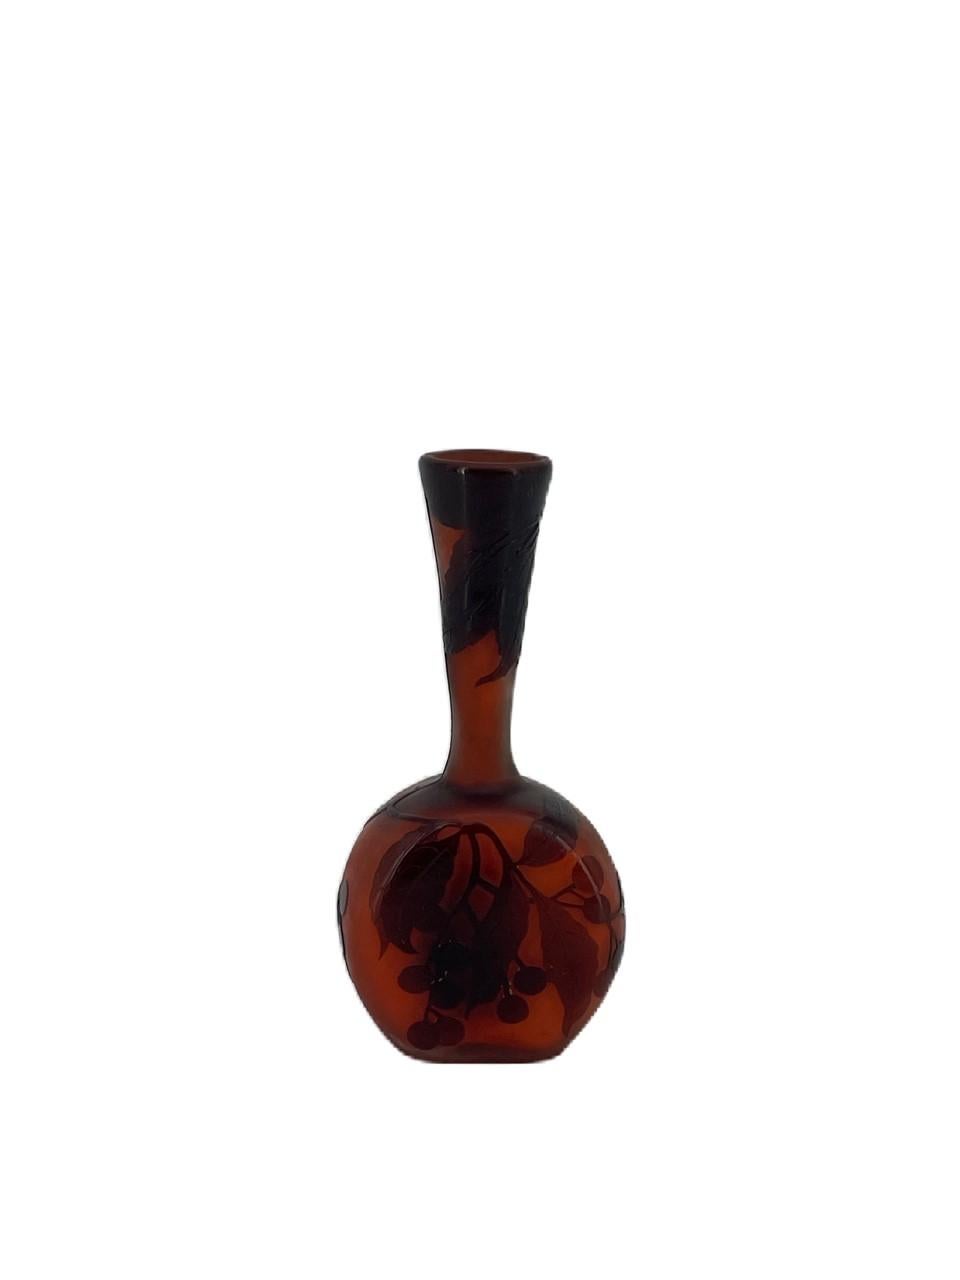 Antique Emile Gallé Vase Art Nouveau Period in Orange Glass In Good Condition For Sale In Tilburg, NL